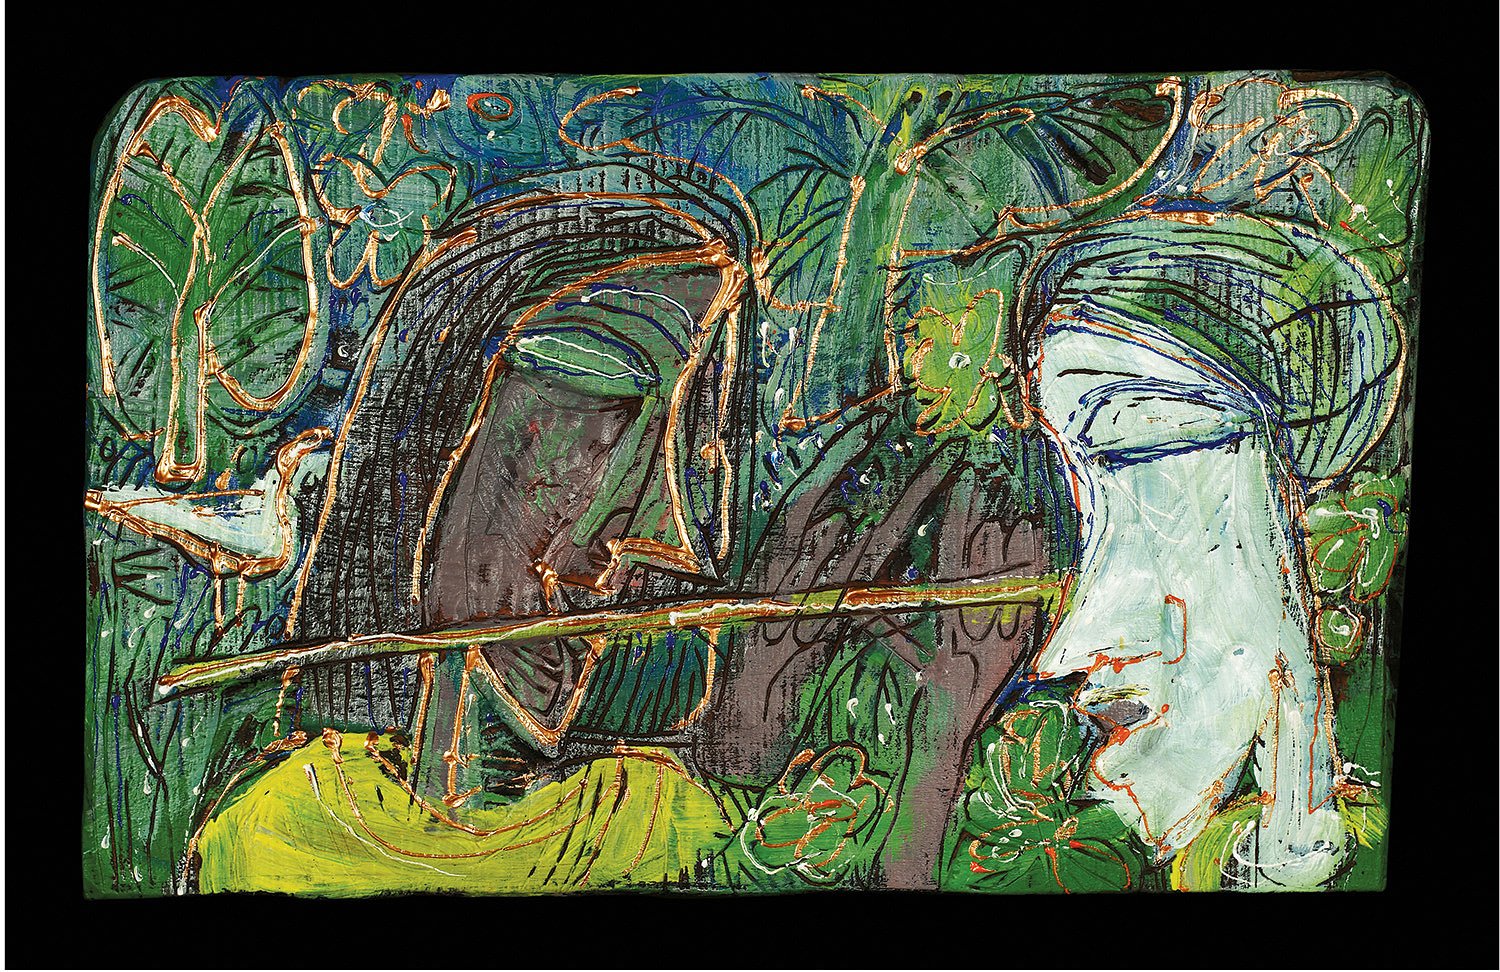 Flute player 2|Dhiraj Choudhury- Burnt & painted wood, 2016, 10 x 16 inches